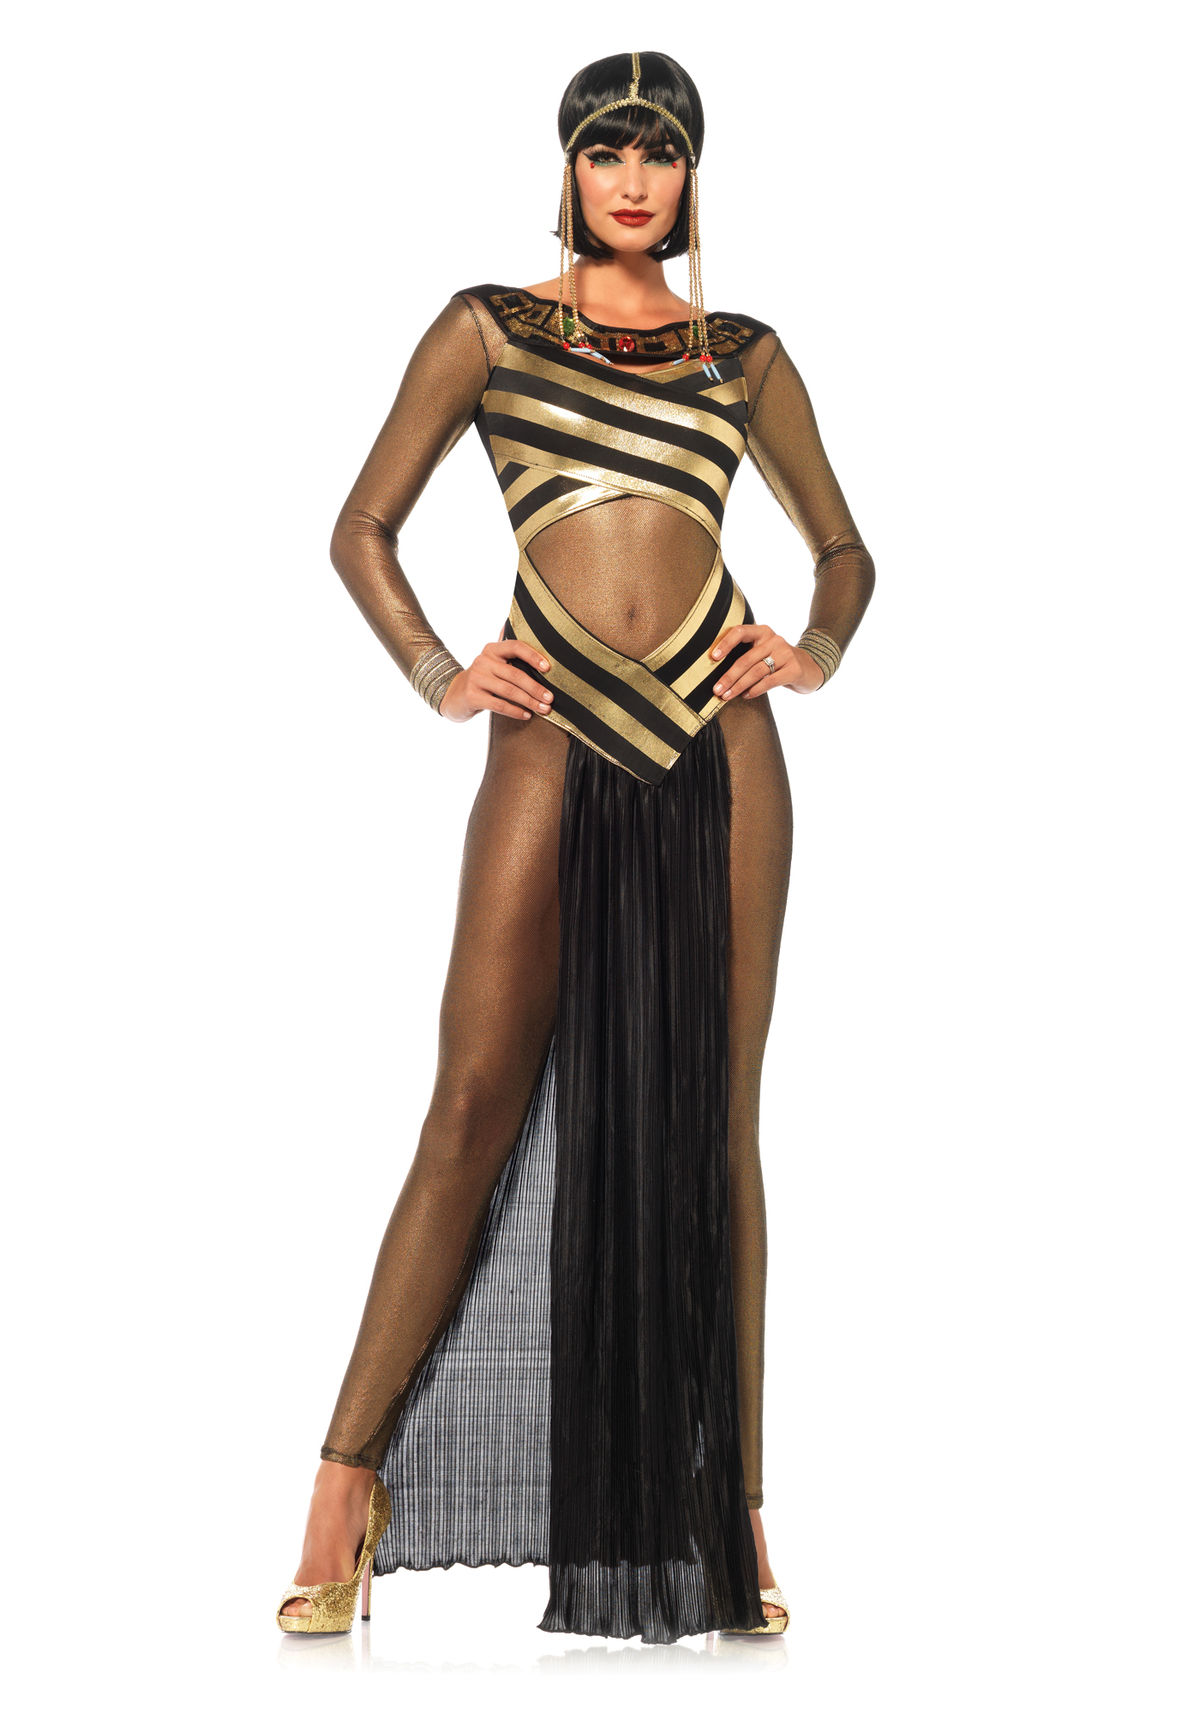 Leg Avenue Goddess Isis Costume